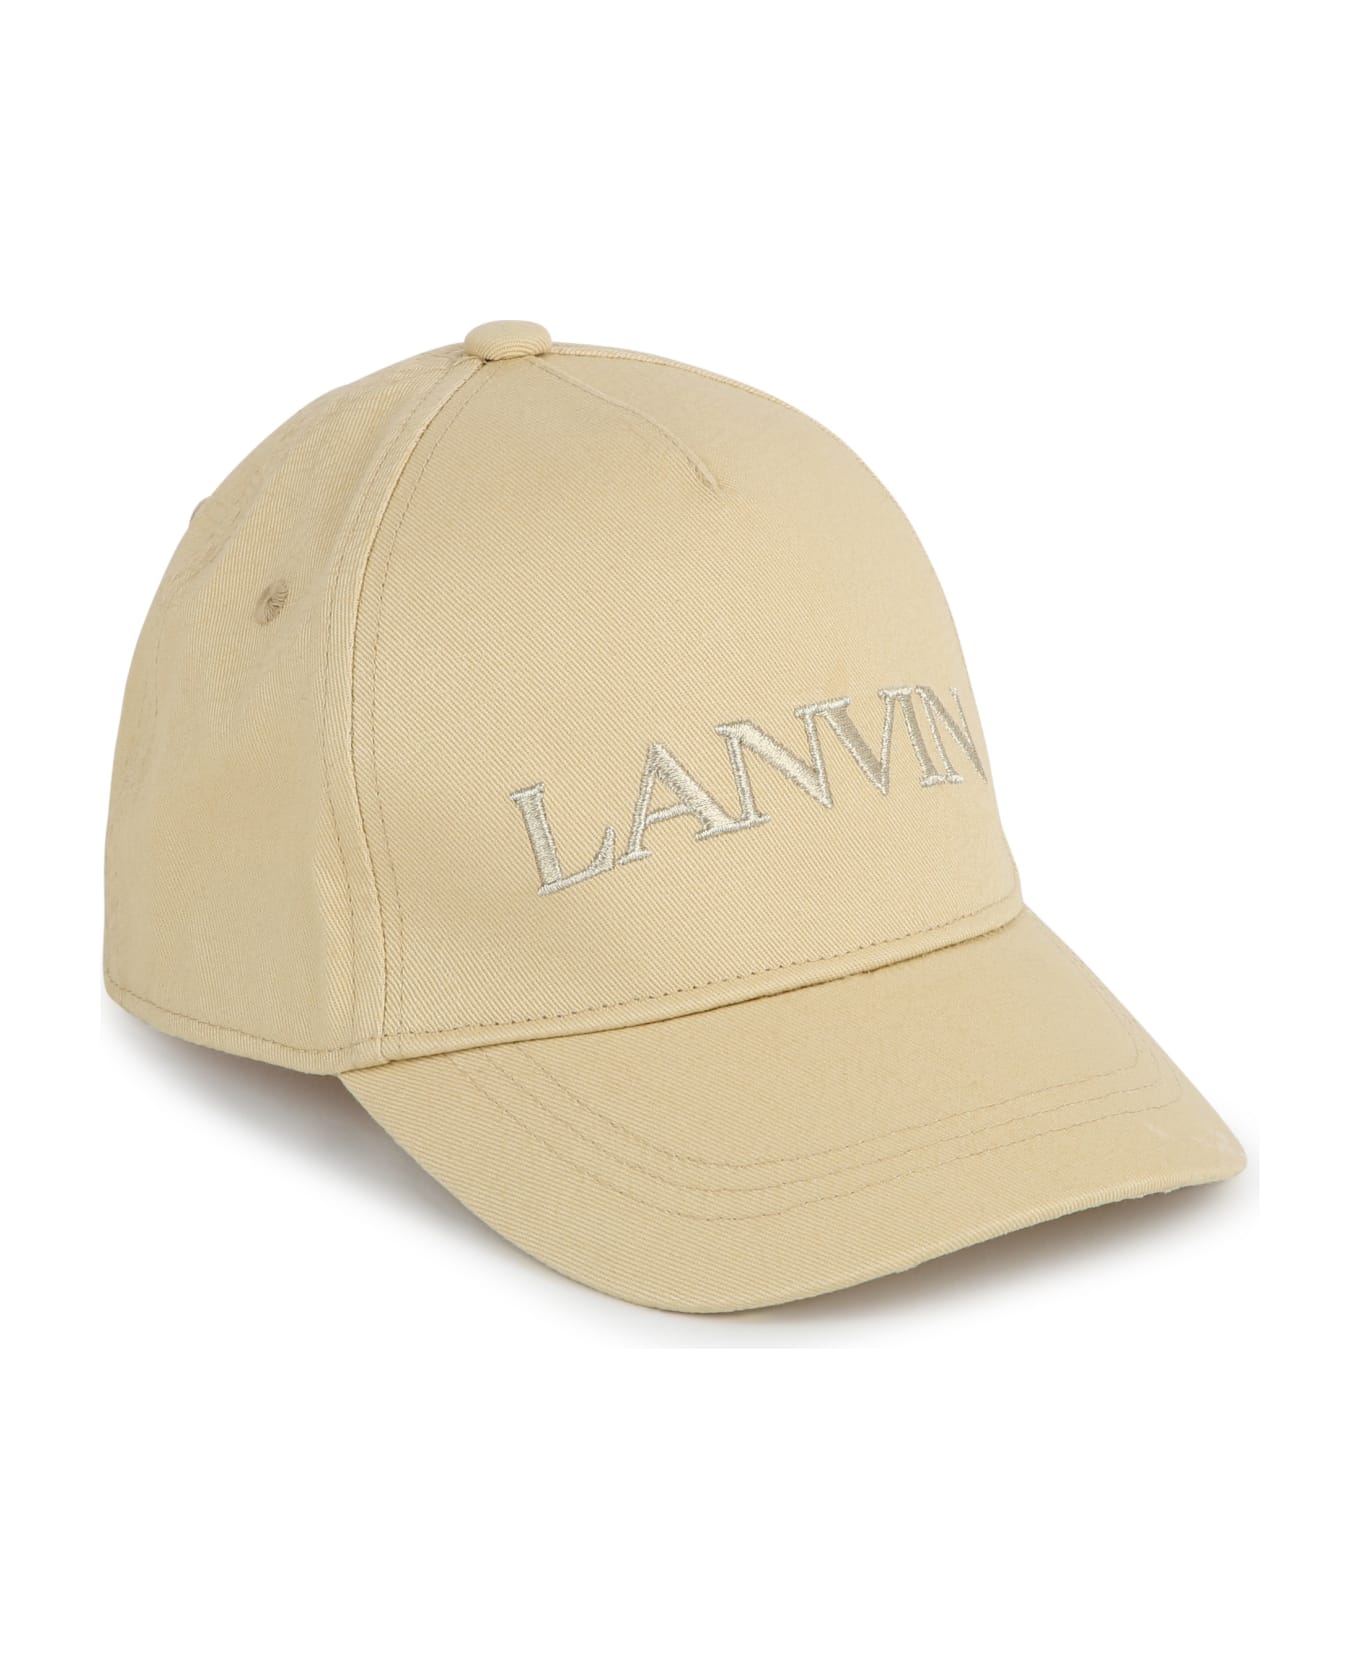 Lanvin Cappello Con Logo - Sabbia